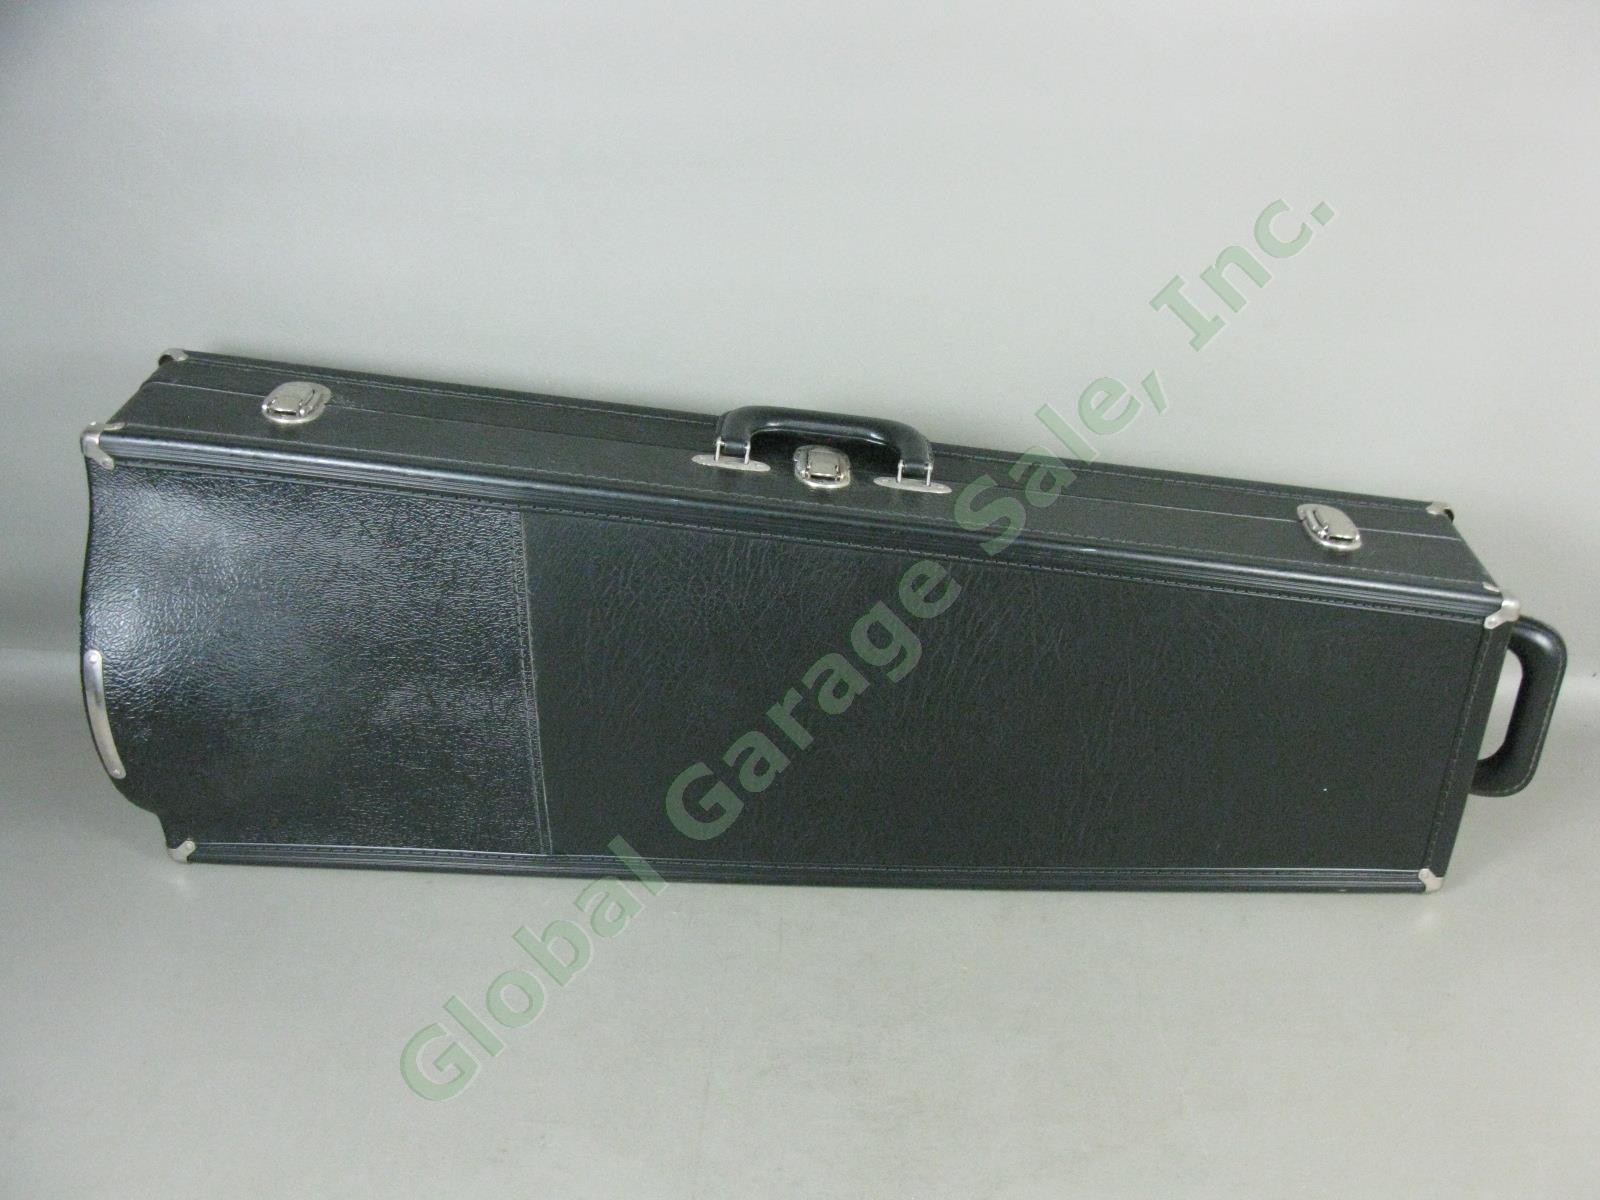 King 2103 3B Slide Trombone 7C Mouthpiece Original Owner/Case VG Condition NR! 18